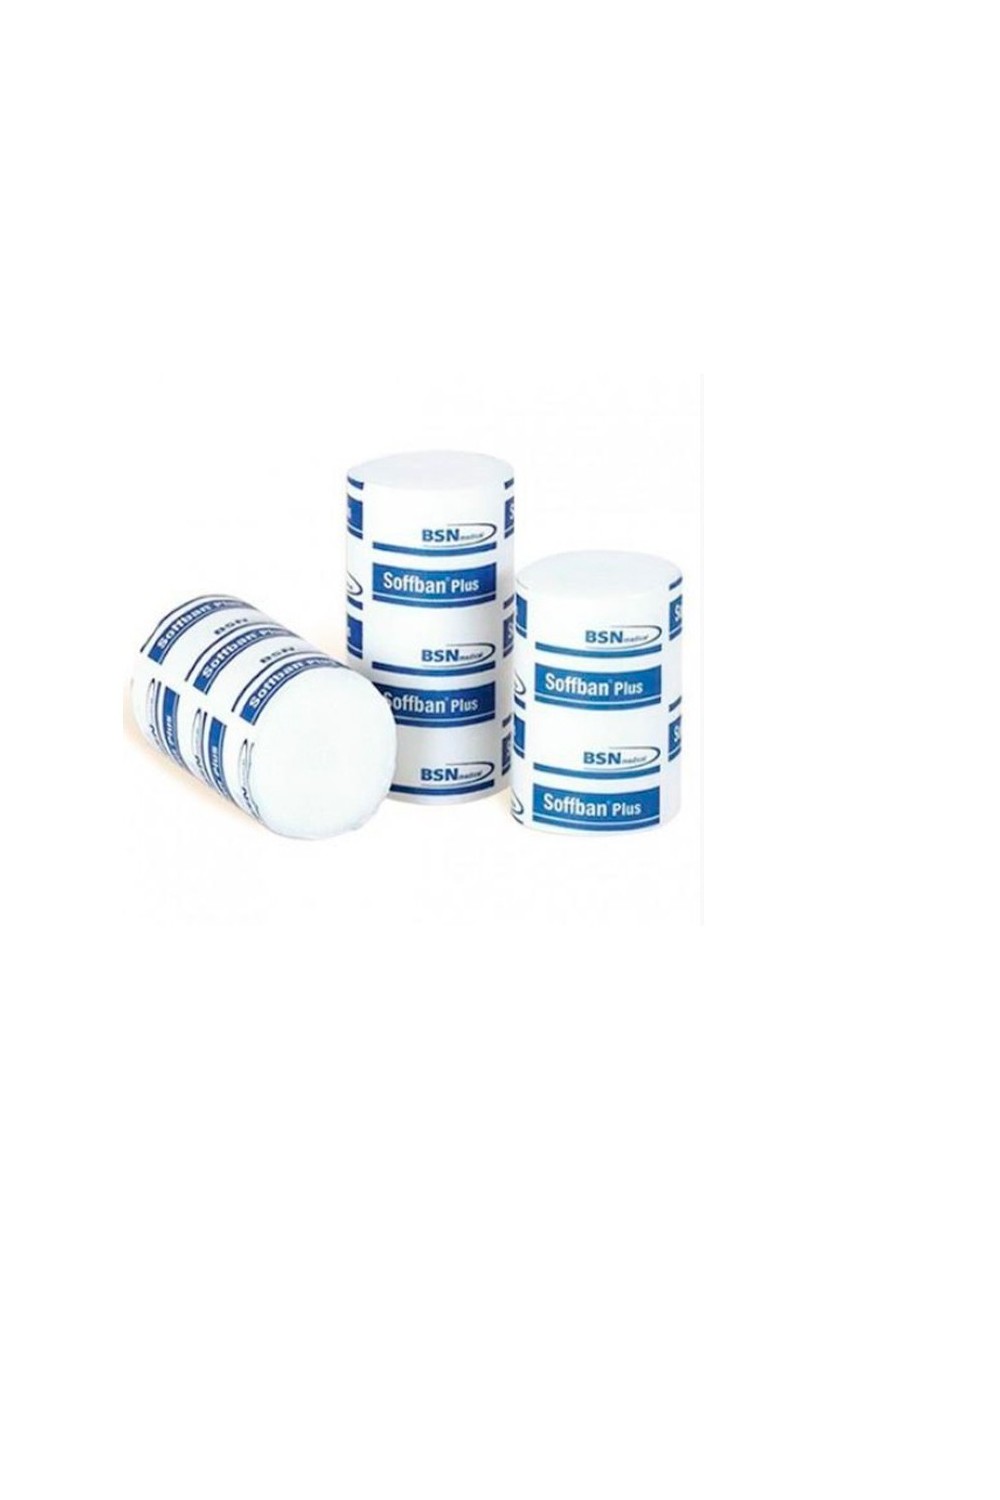 BSN MEDICAL - Soffban Plus Padding Bandages 12 Pack Size 15cm